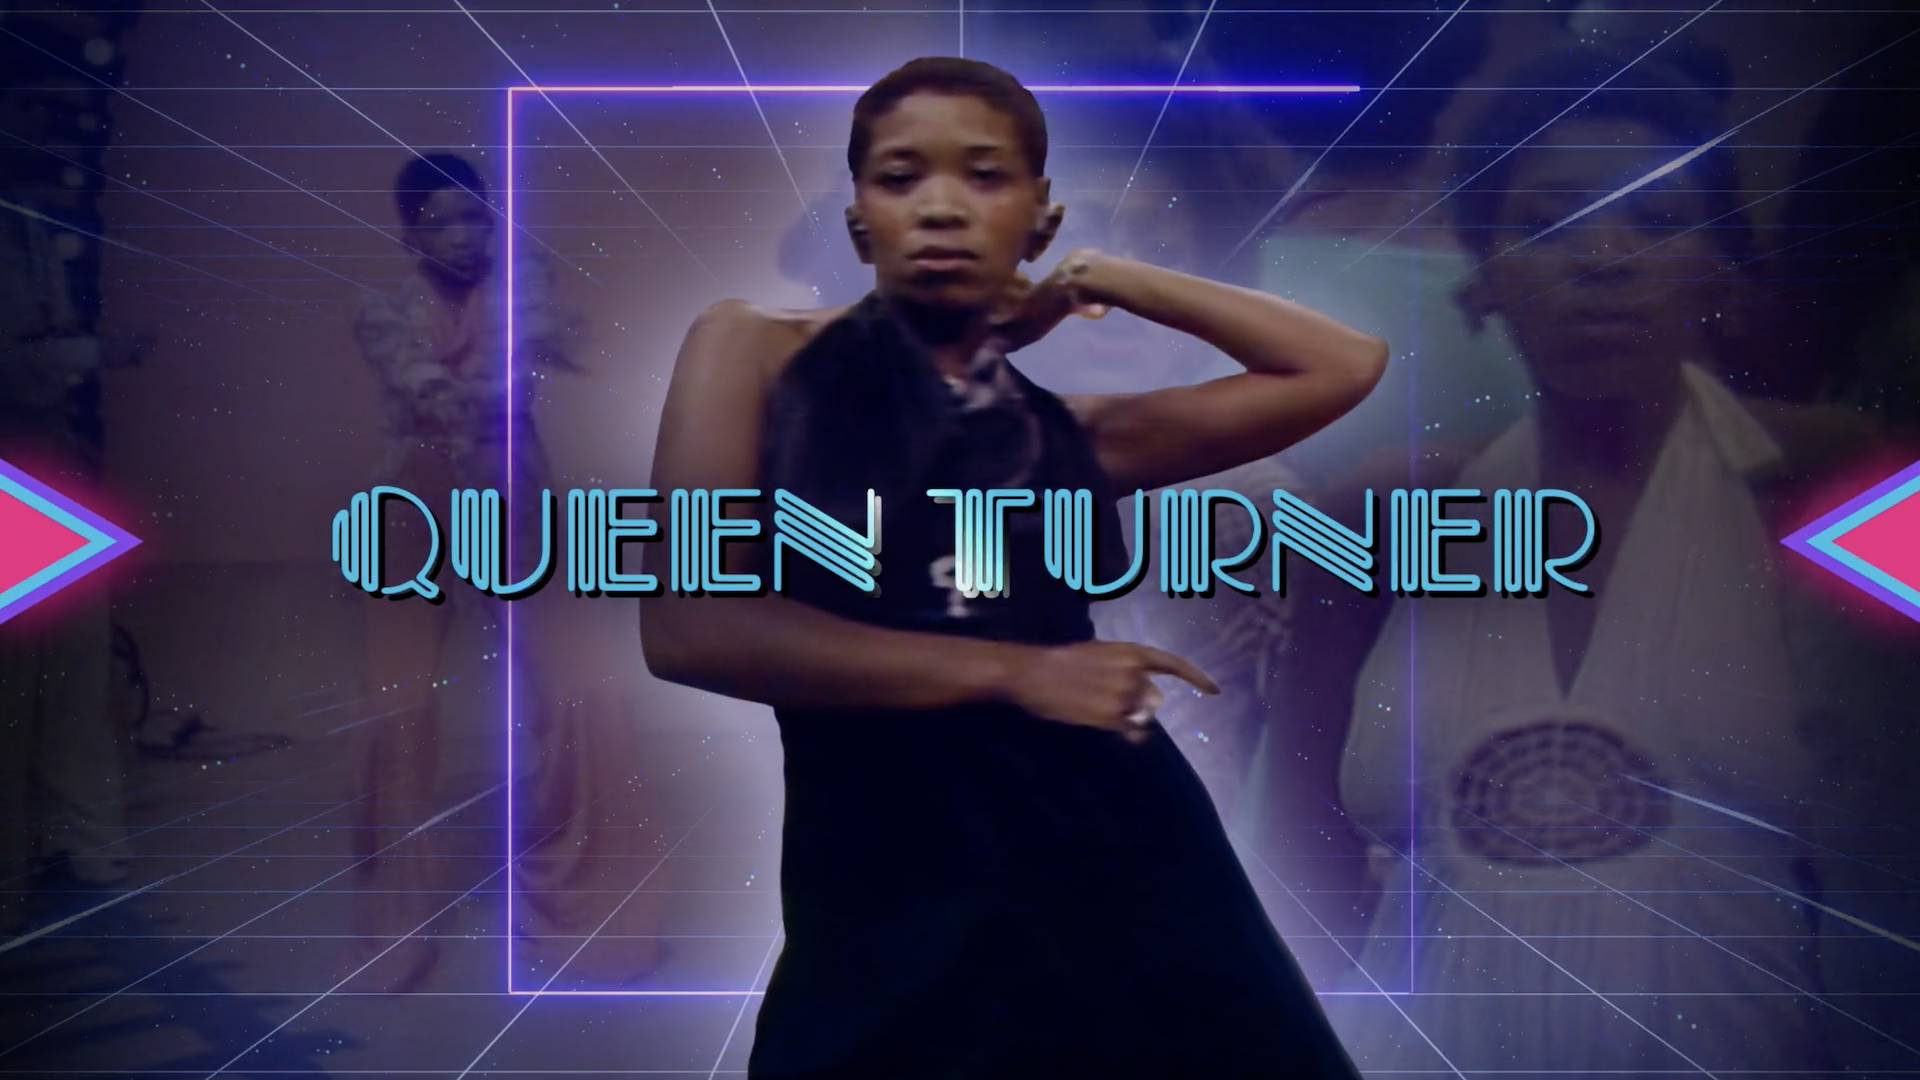 Soul Train dancer Queen turner, pictured in a black dress.